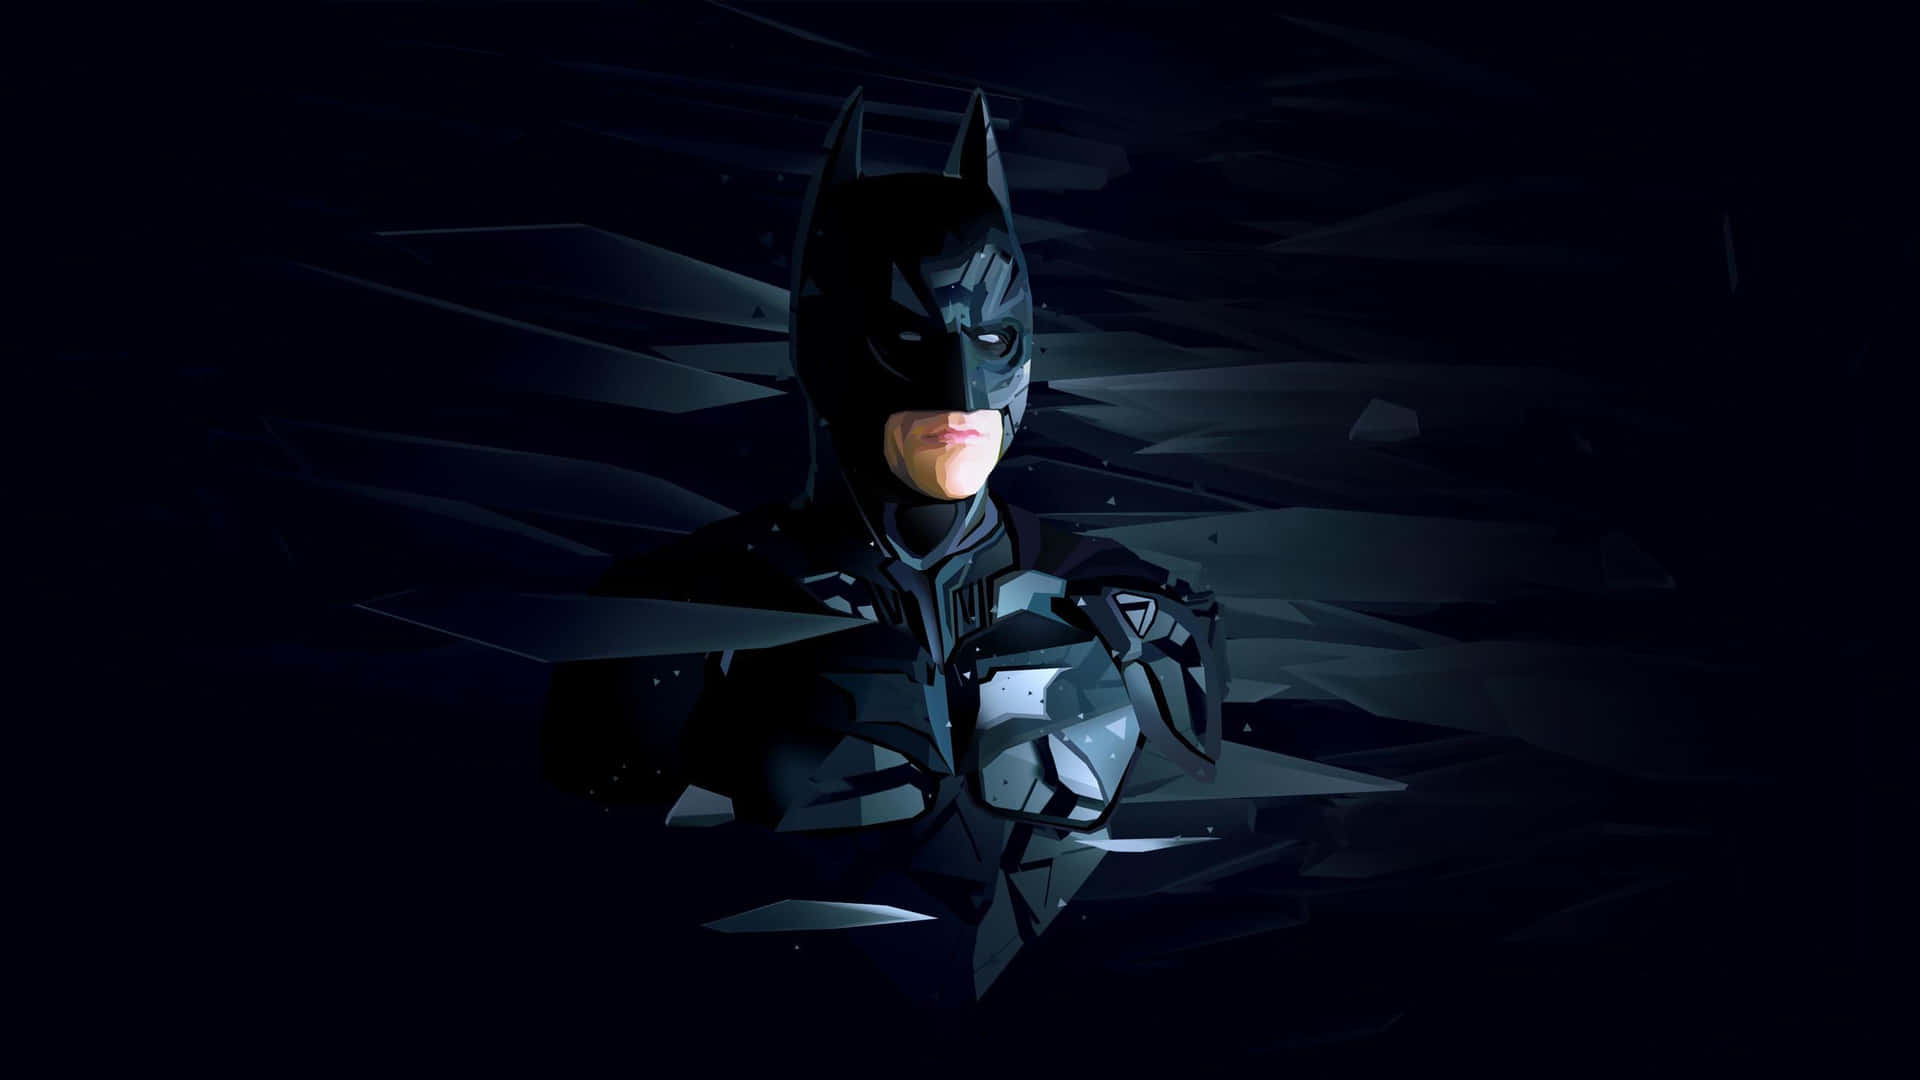 Batman soars over the night sky in a glorious display of heroism Wallpaper